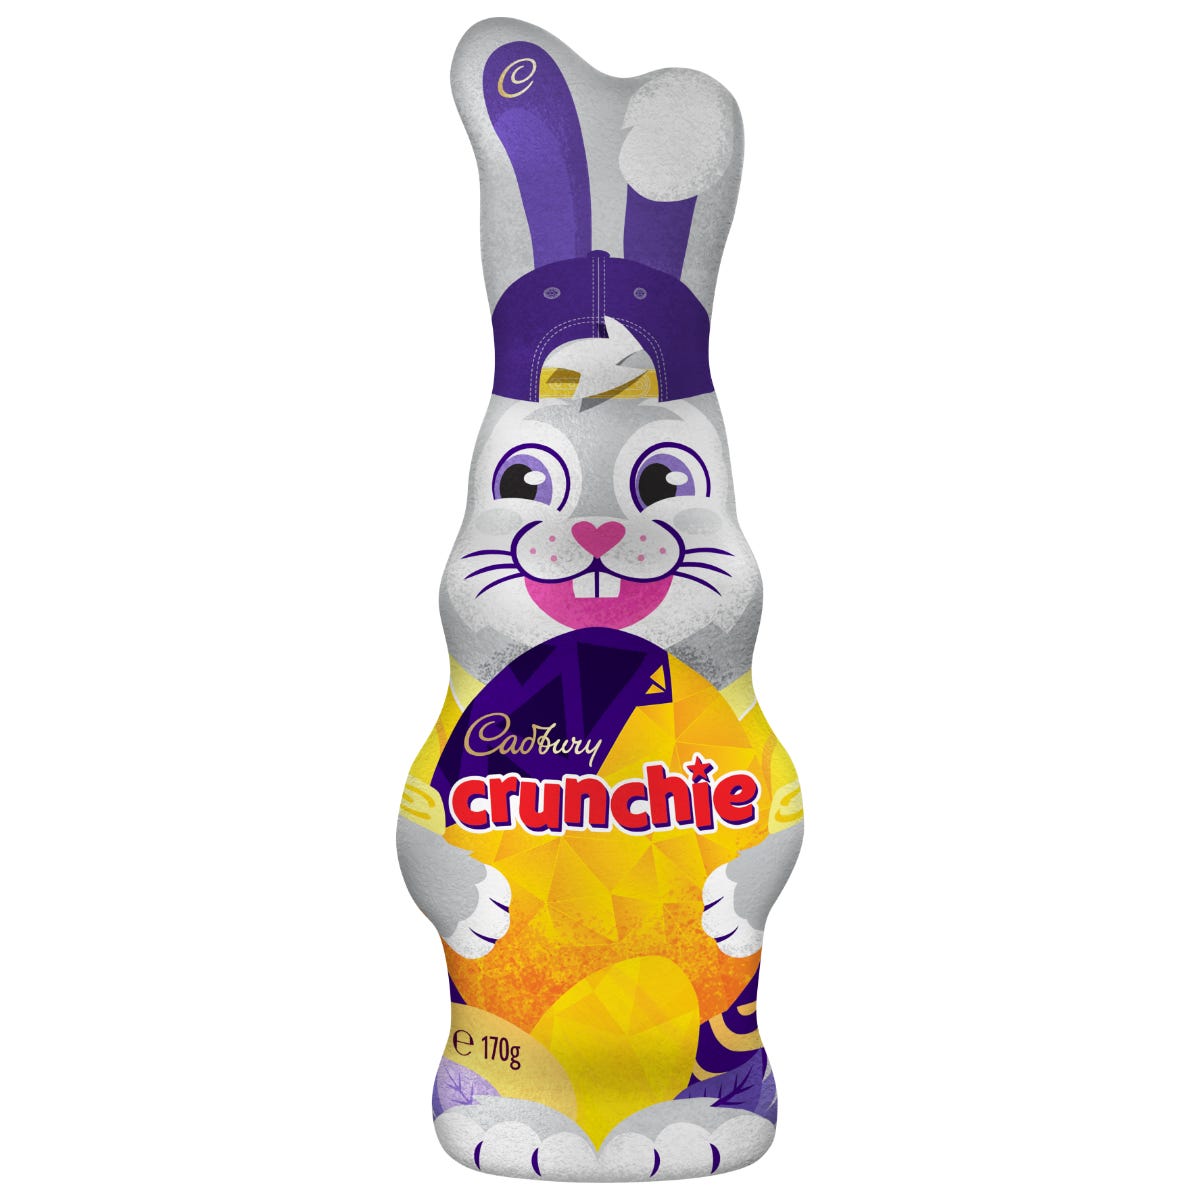 Cadbury Crunchie Easter Bunny 170g